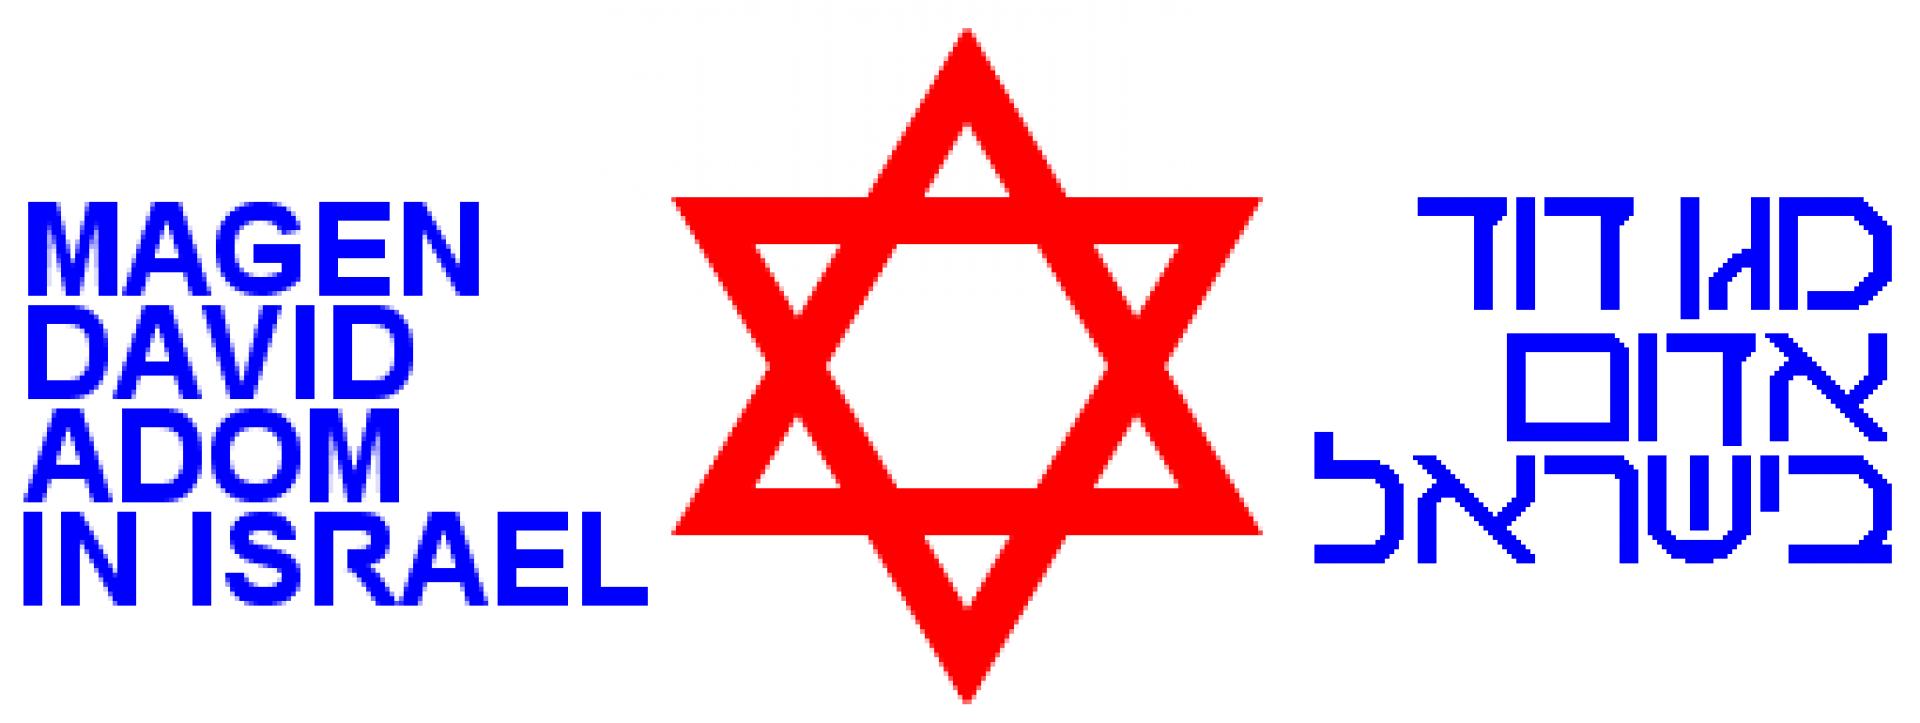 Magen David Adom ((Hebrew: מגן דוד אדום, abbr. MDA) logo